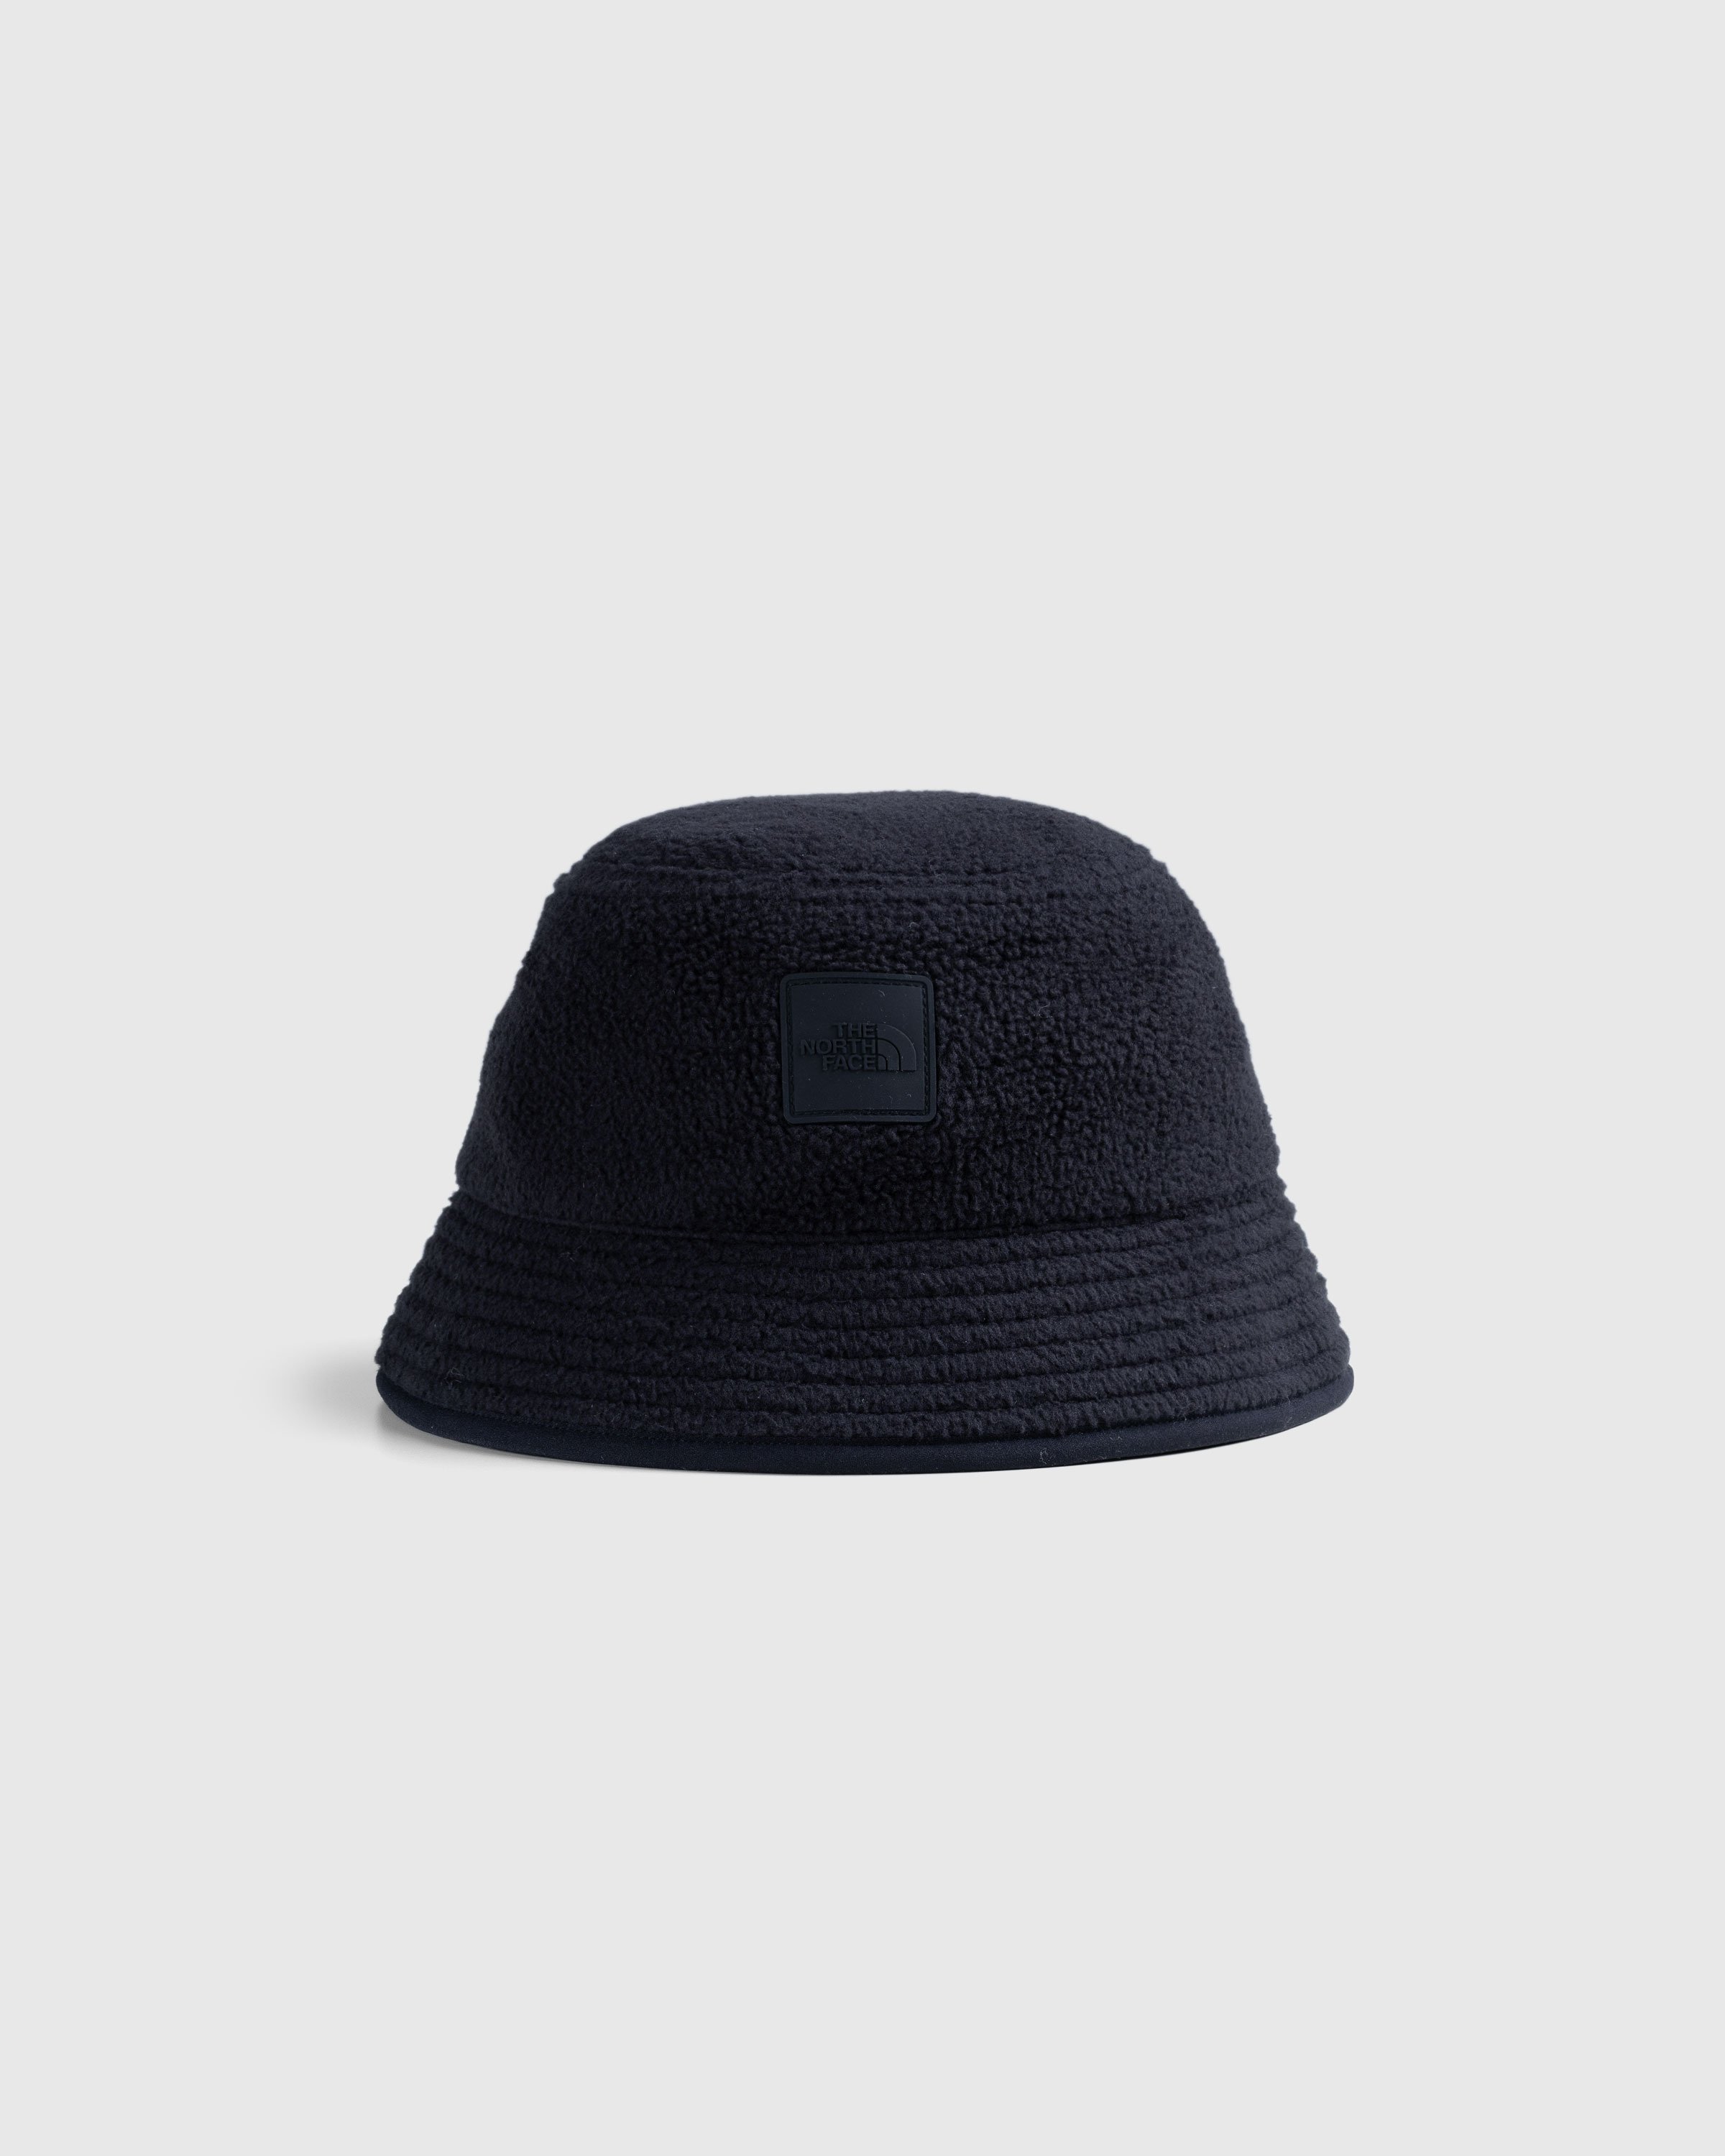 The North Face - Fleeski Street Bucket Hat Black - Accessories - Black - Image 1